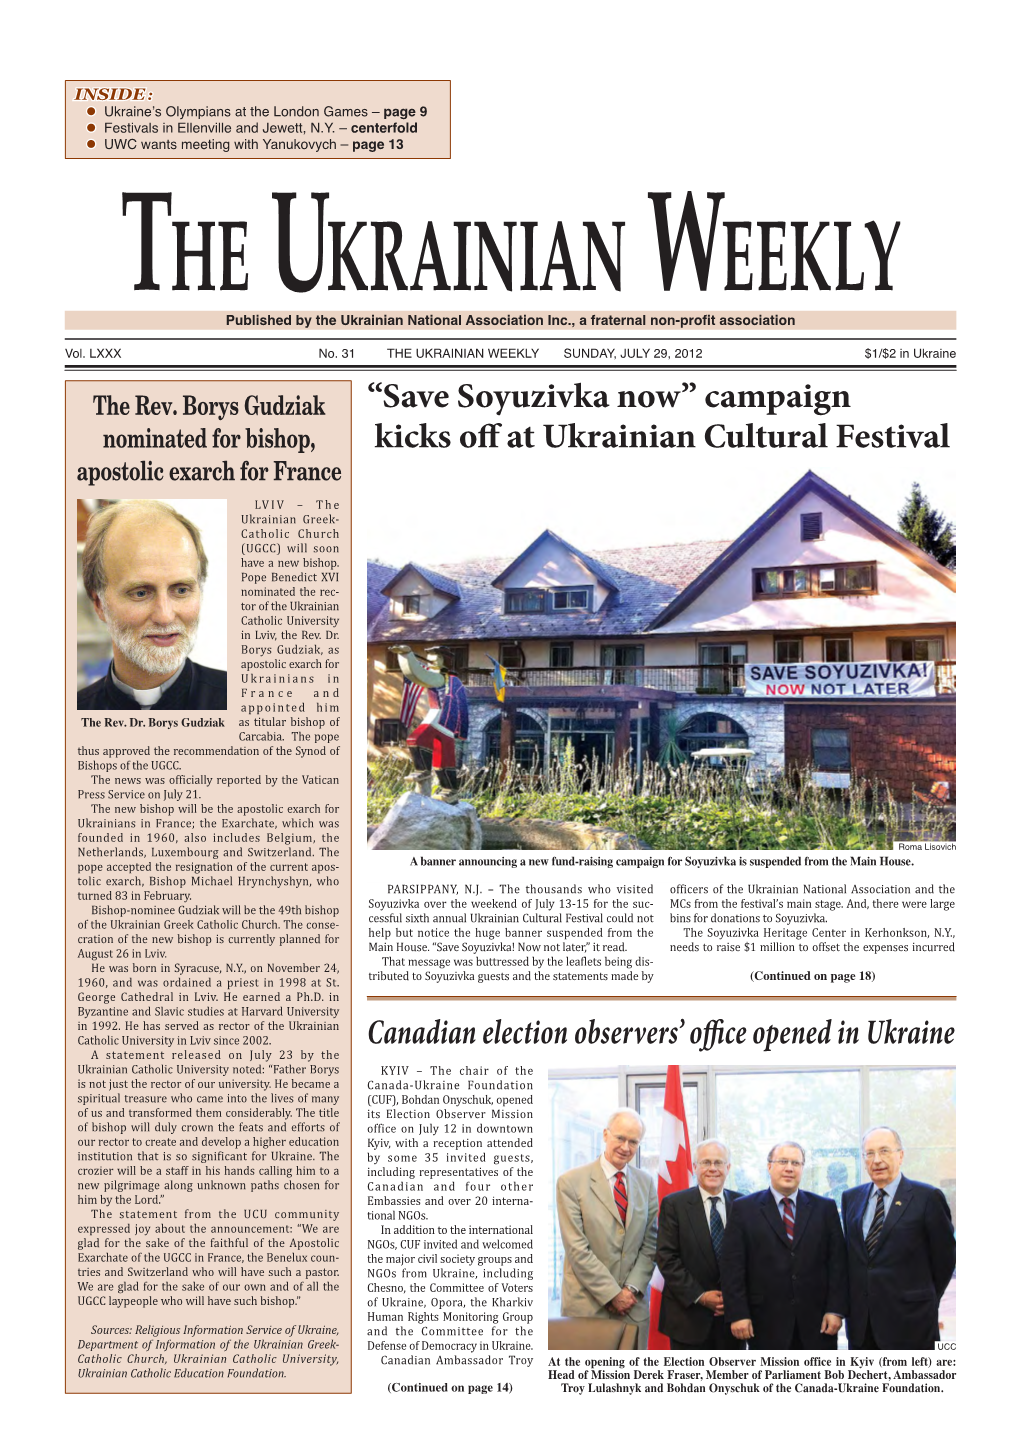 The Ukrainian Weekly 2012, No.31